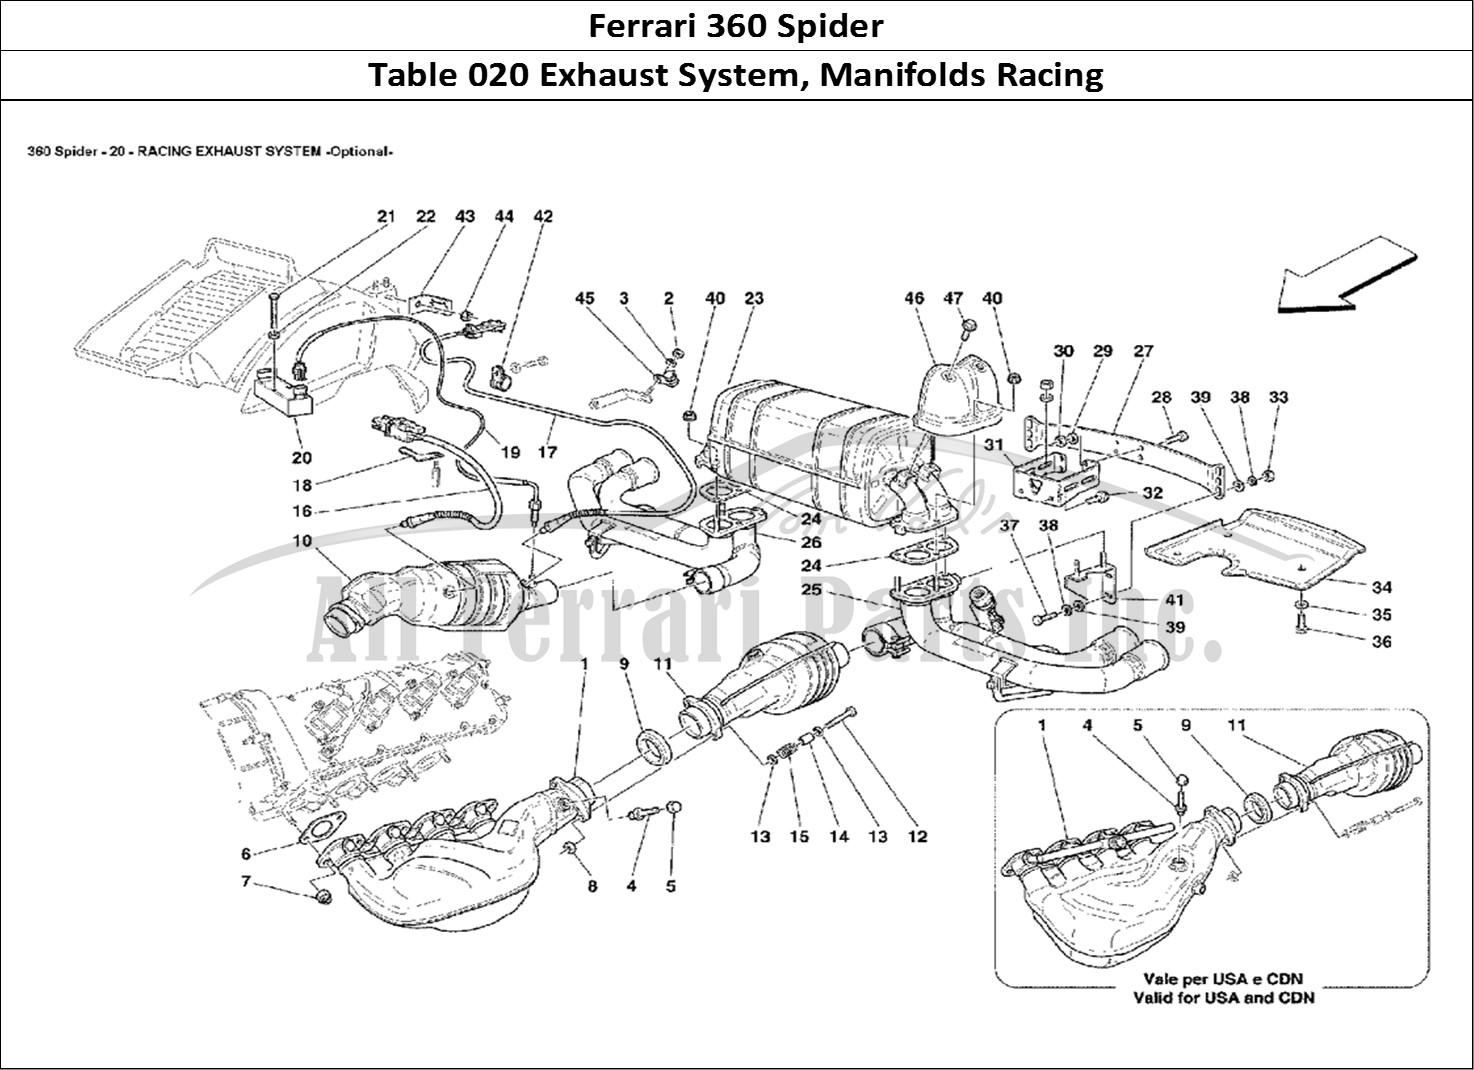 Ferrari Parts Ferrari 360 Spider Page 020 Racing Exhaust System - O